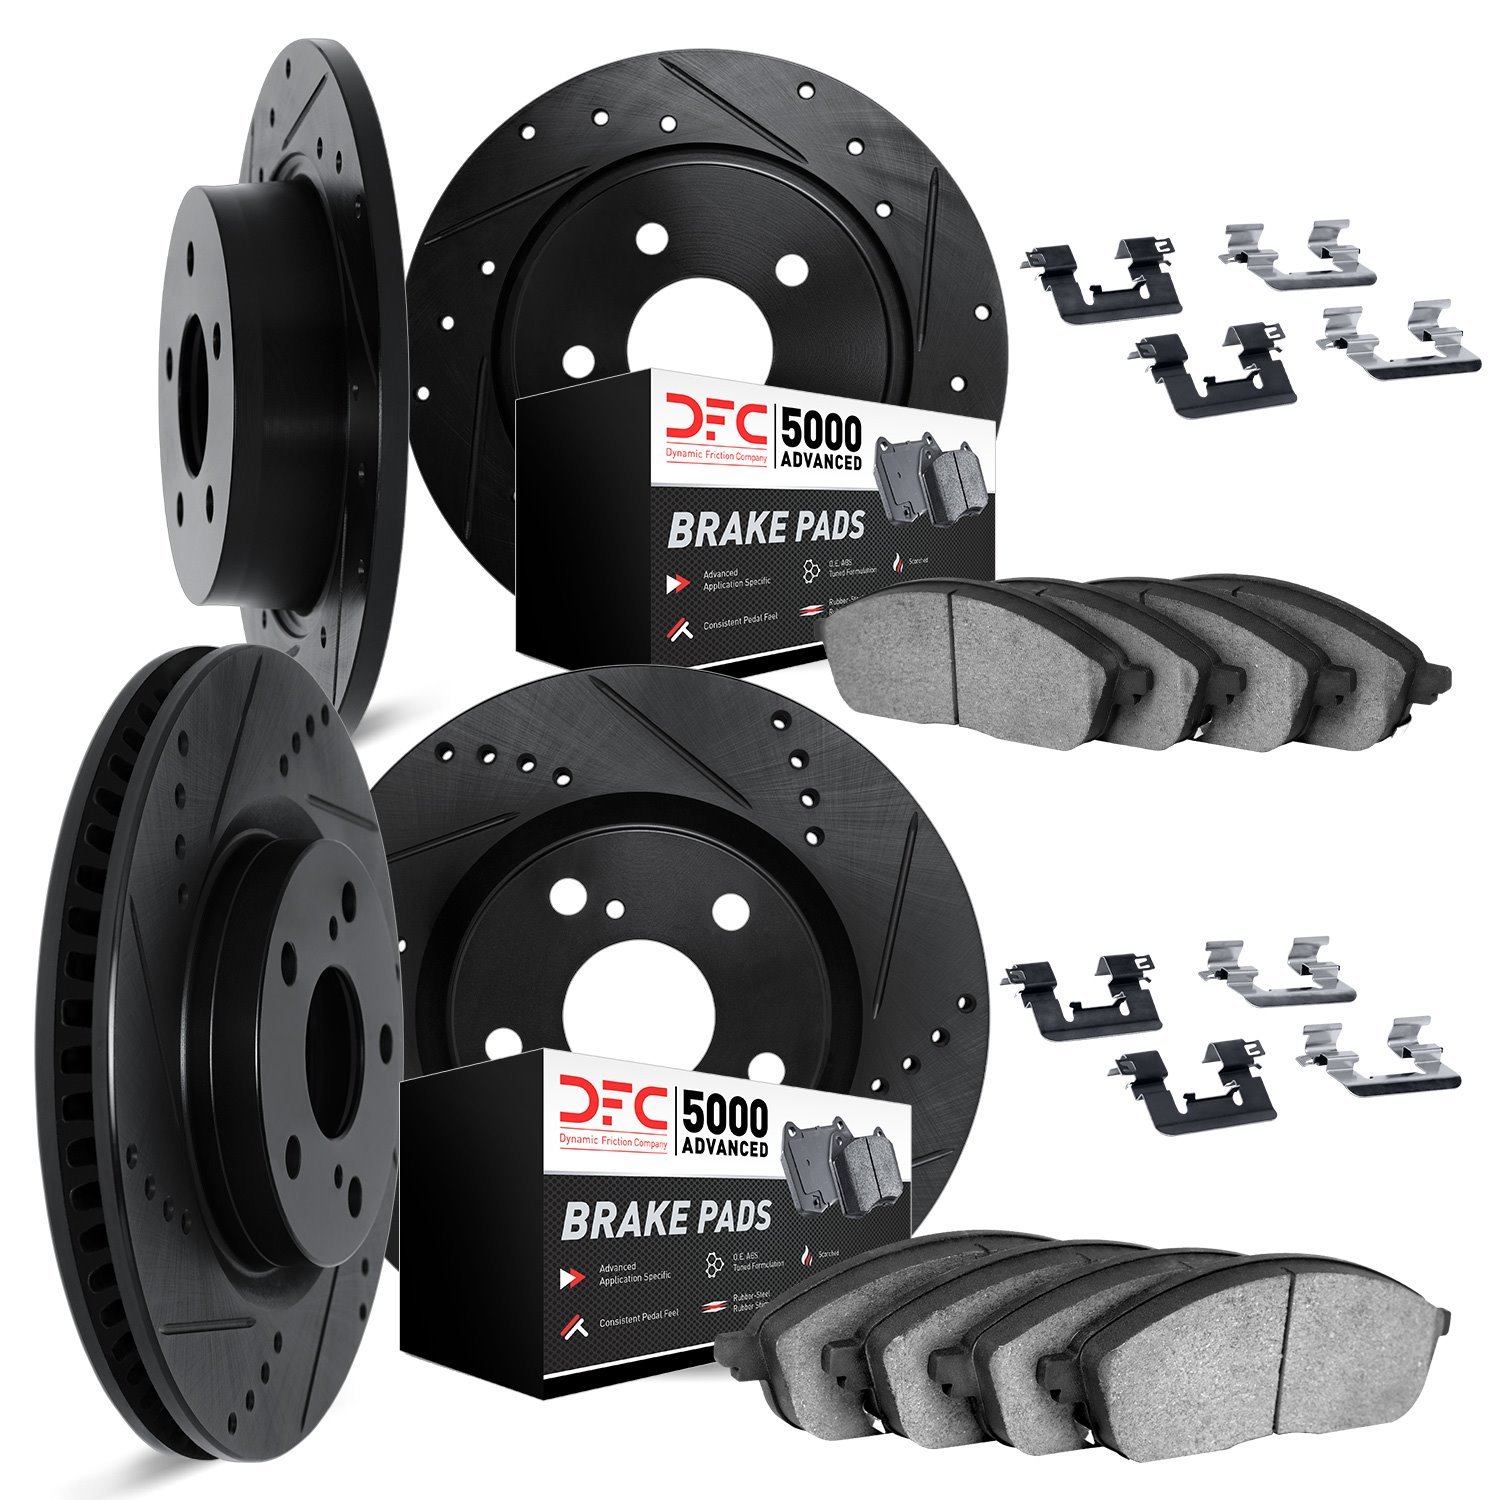 8514-67116 Drilled/Slotted Brake Rotors w/5000 Advanced Brake Pads Kit & Hardware [Black], 2010-2014 Renault, Position: Front an